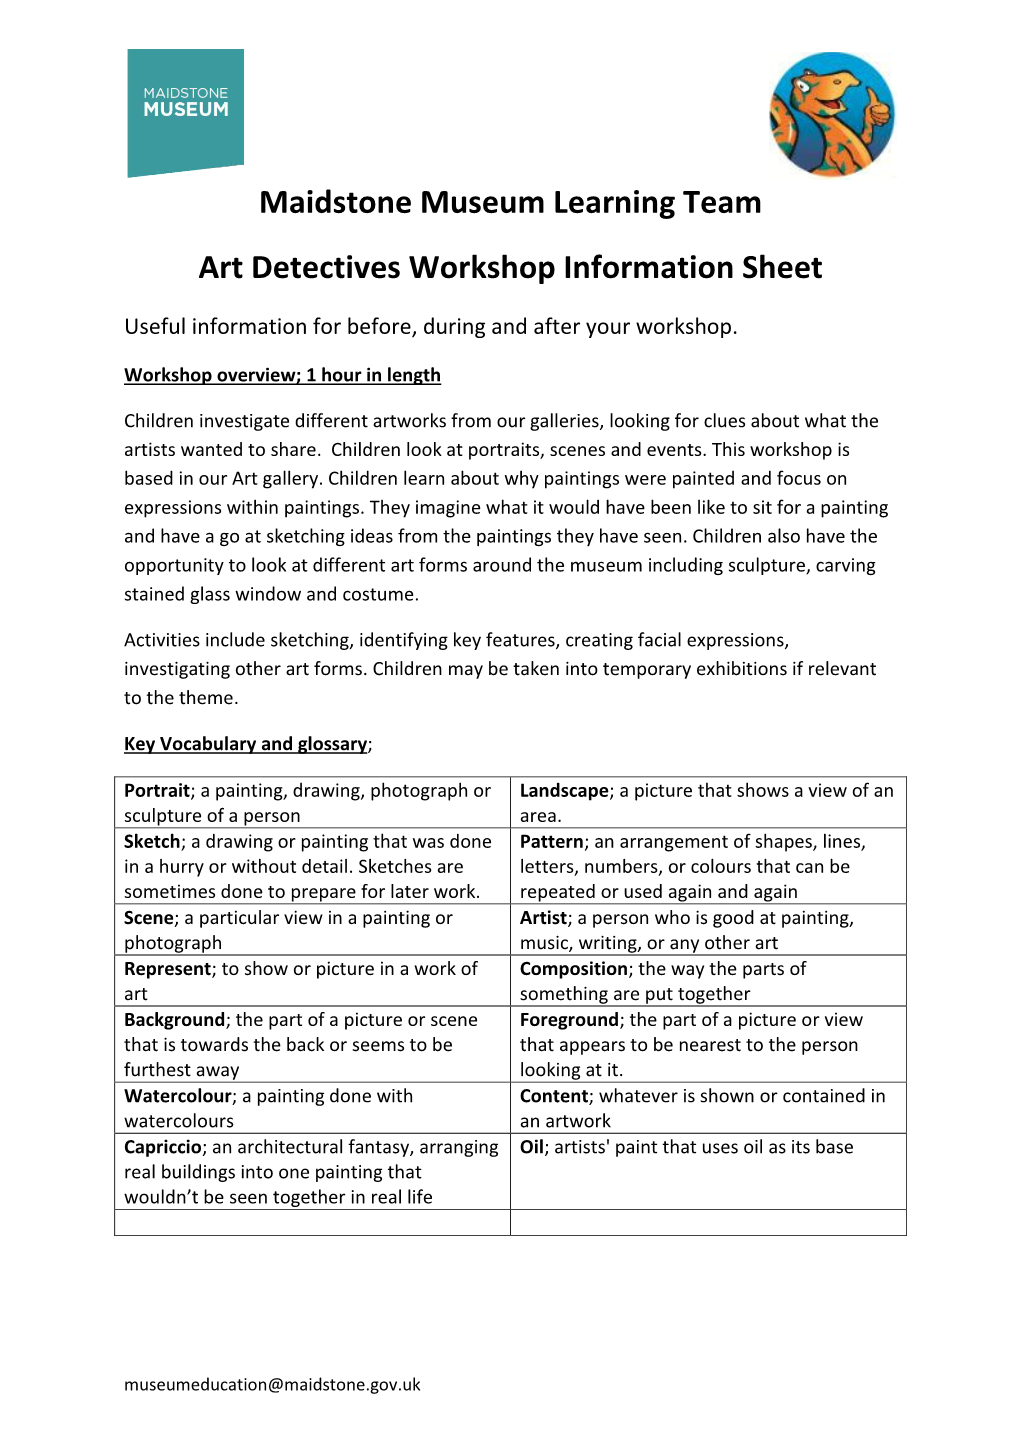 Maidstone Museum Learning Team Art Detectives Workshop Information Sheet